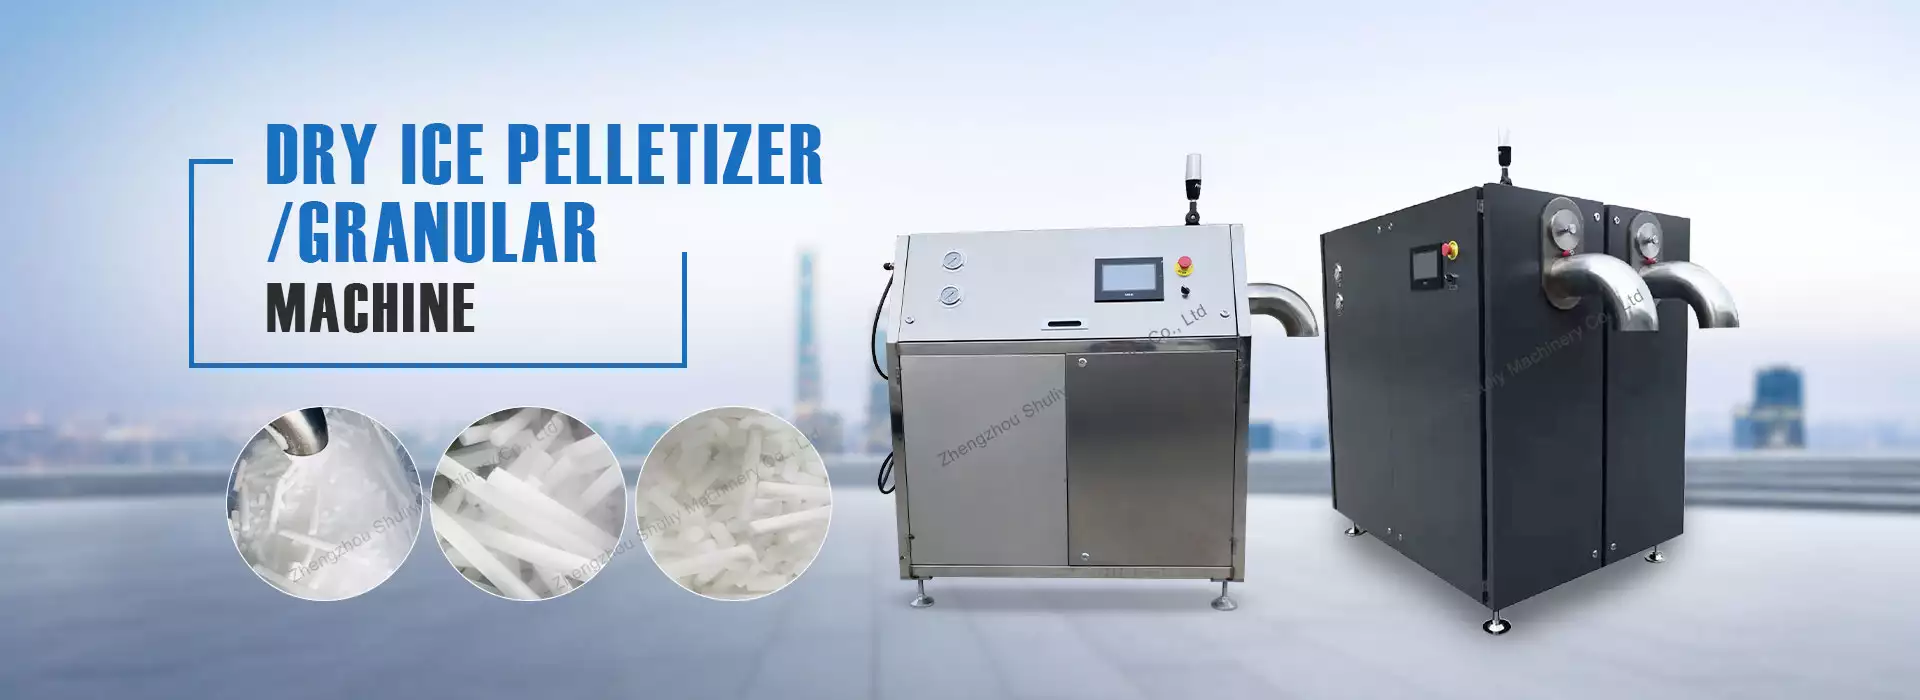 dry ice pelletizer granular machine